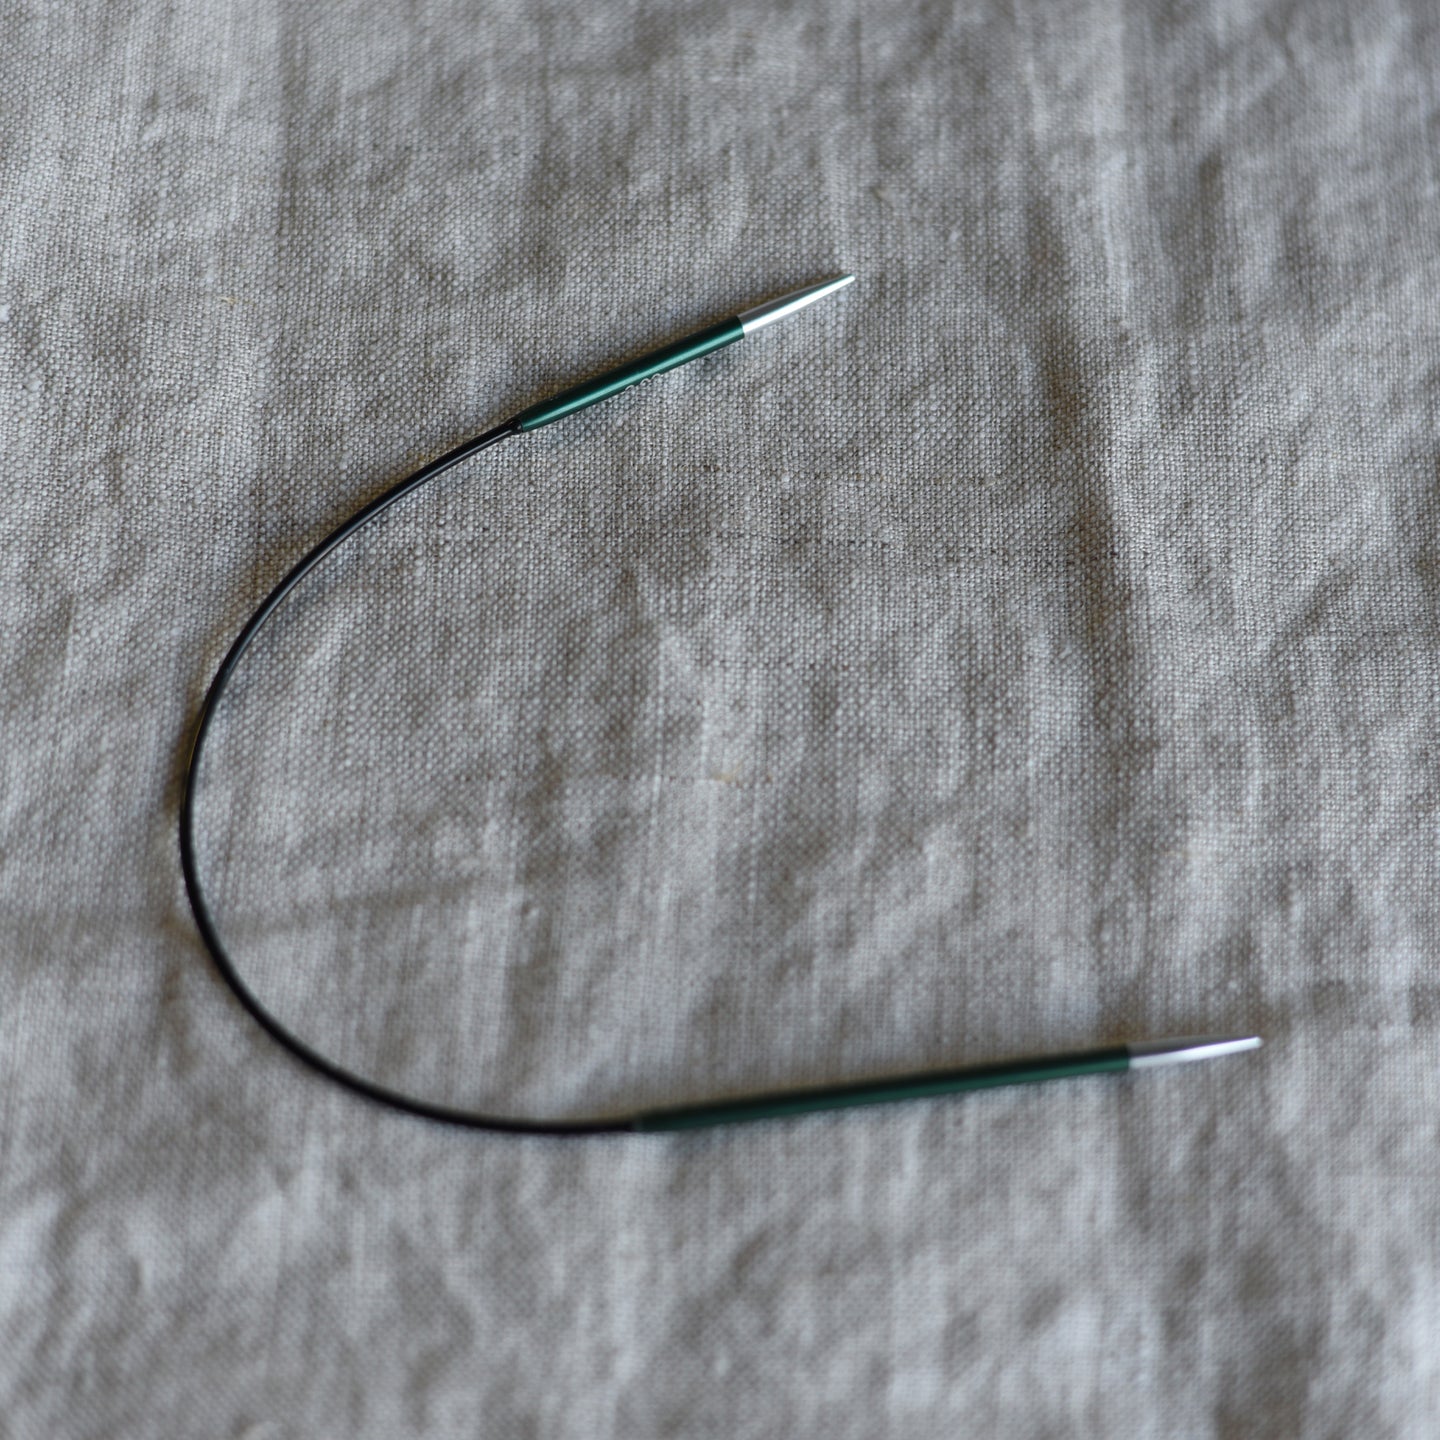 Knitpro Zing Sock cable needles - 3mm & 25cm length